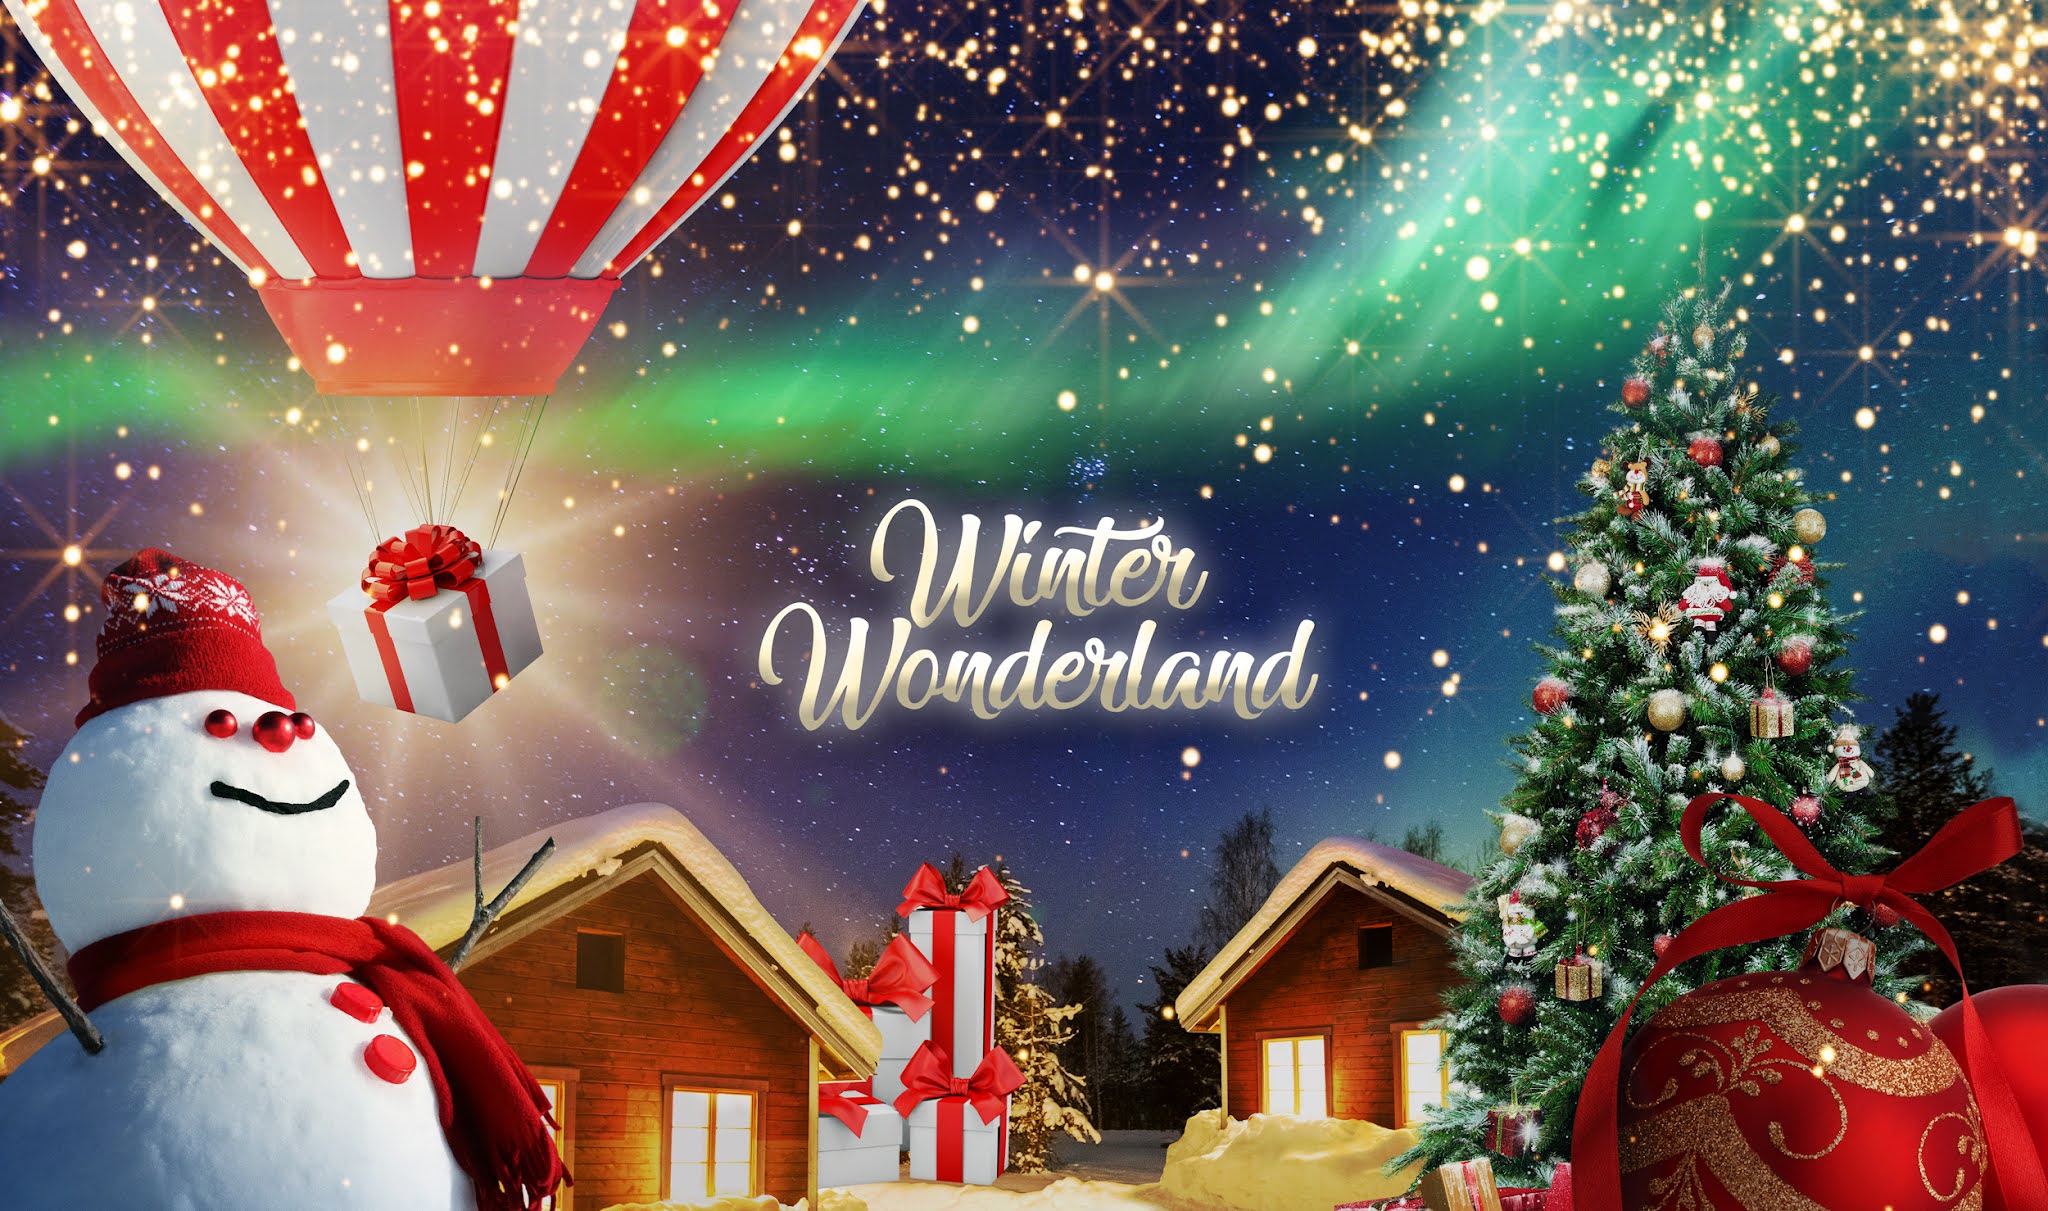 【Winter Wonderland冰雪奇幻國度】  留港歡度歐洲聖誕 穿梭光影藝術之旅、極地冰窖暢飲  集遊樂、飲食、購物於一館